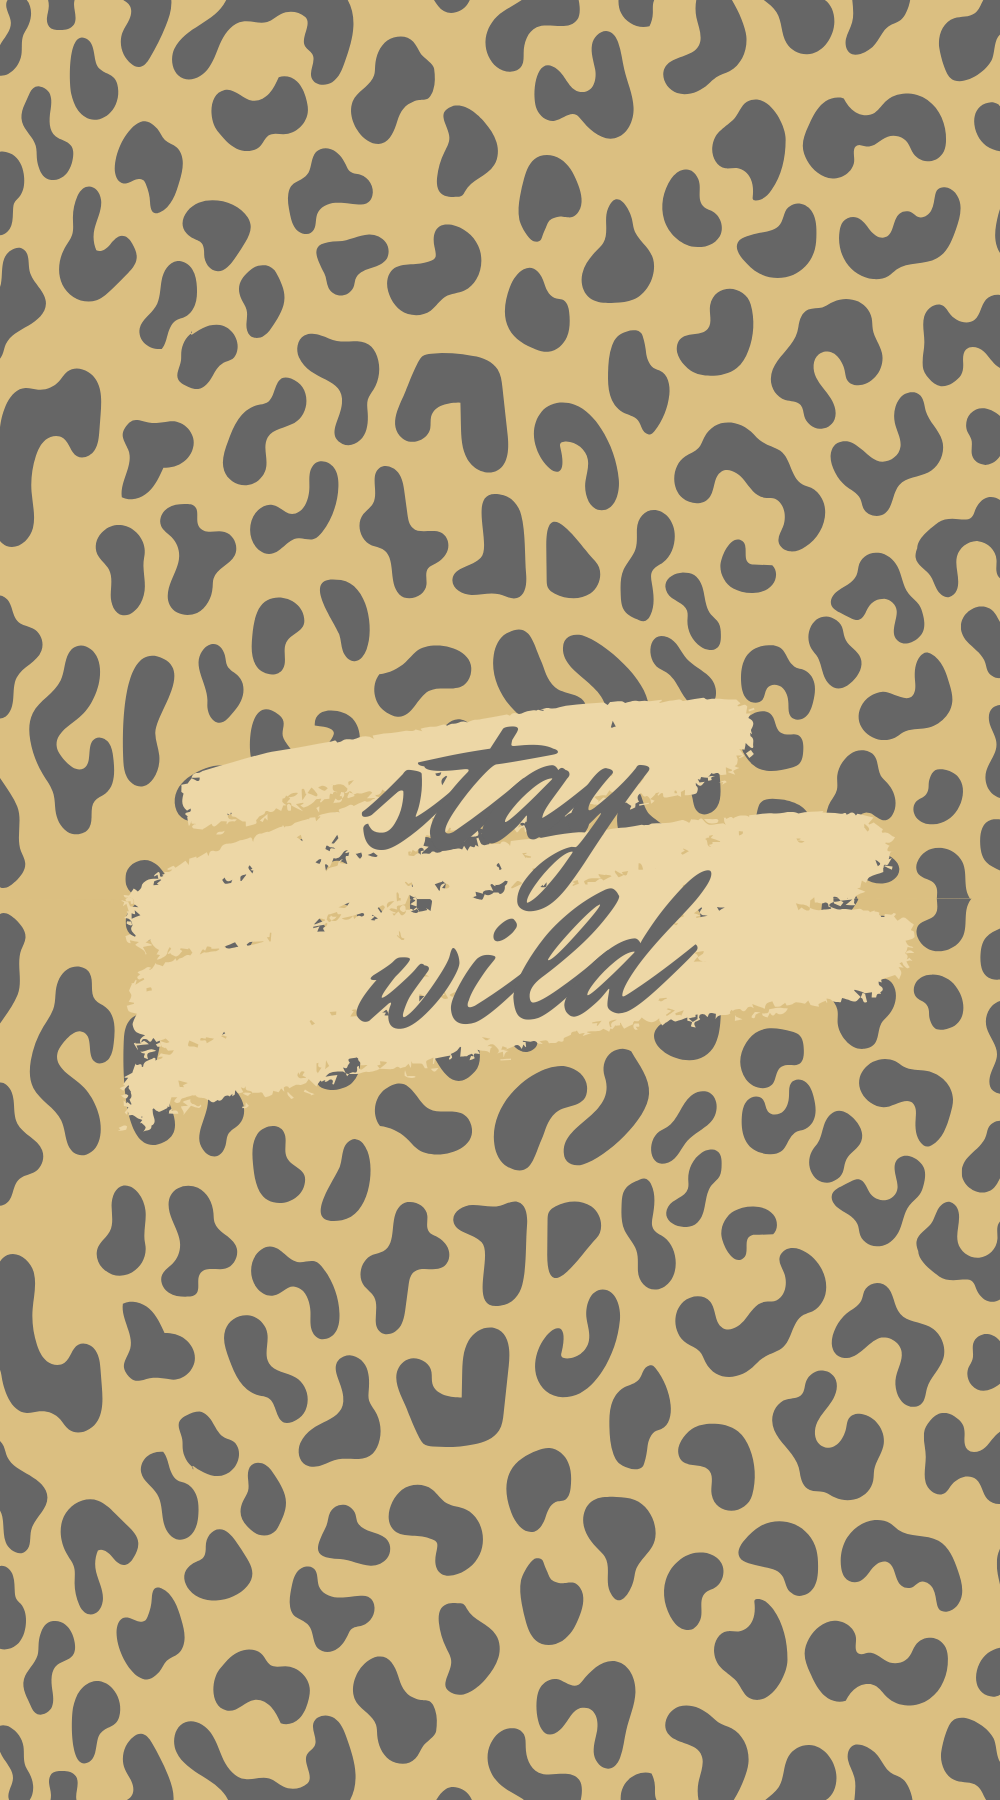 Free download Cute iPhone Wallpaper and Backgrounds Cheetah print wallpaper  1000x1800 for your Desktop Mobile  Tablet  Explore 26 Cute Leopard  Print Wallpapers  Leopard Print Wallpaper Leopard Print Background  Wallpaper